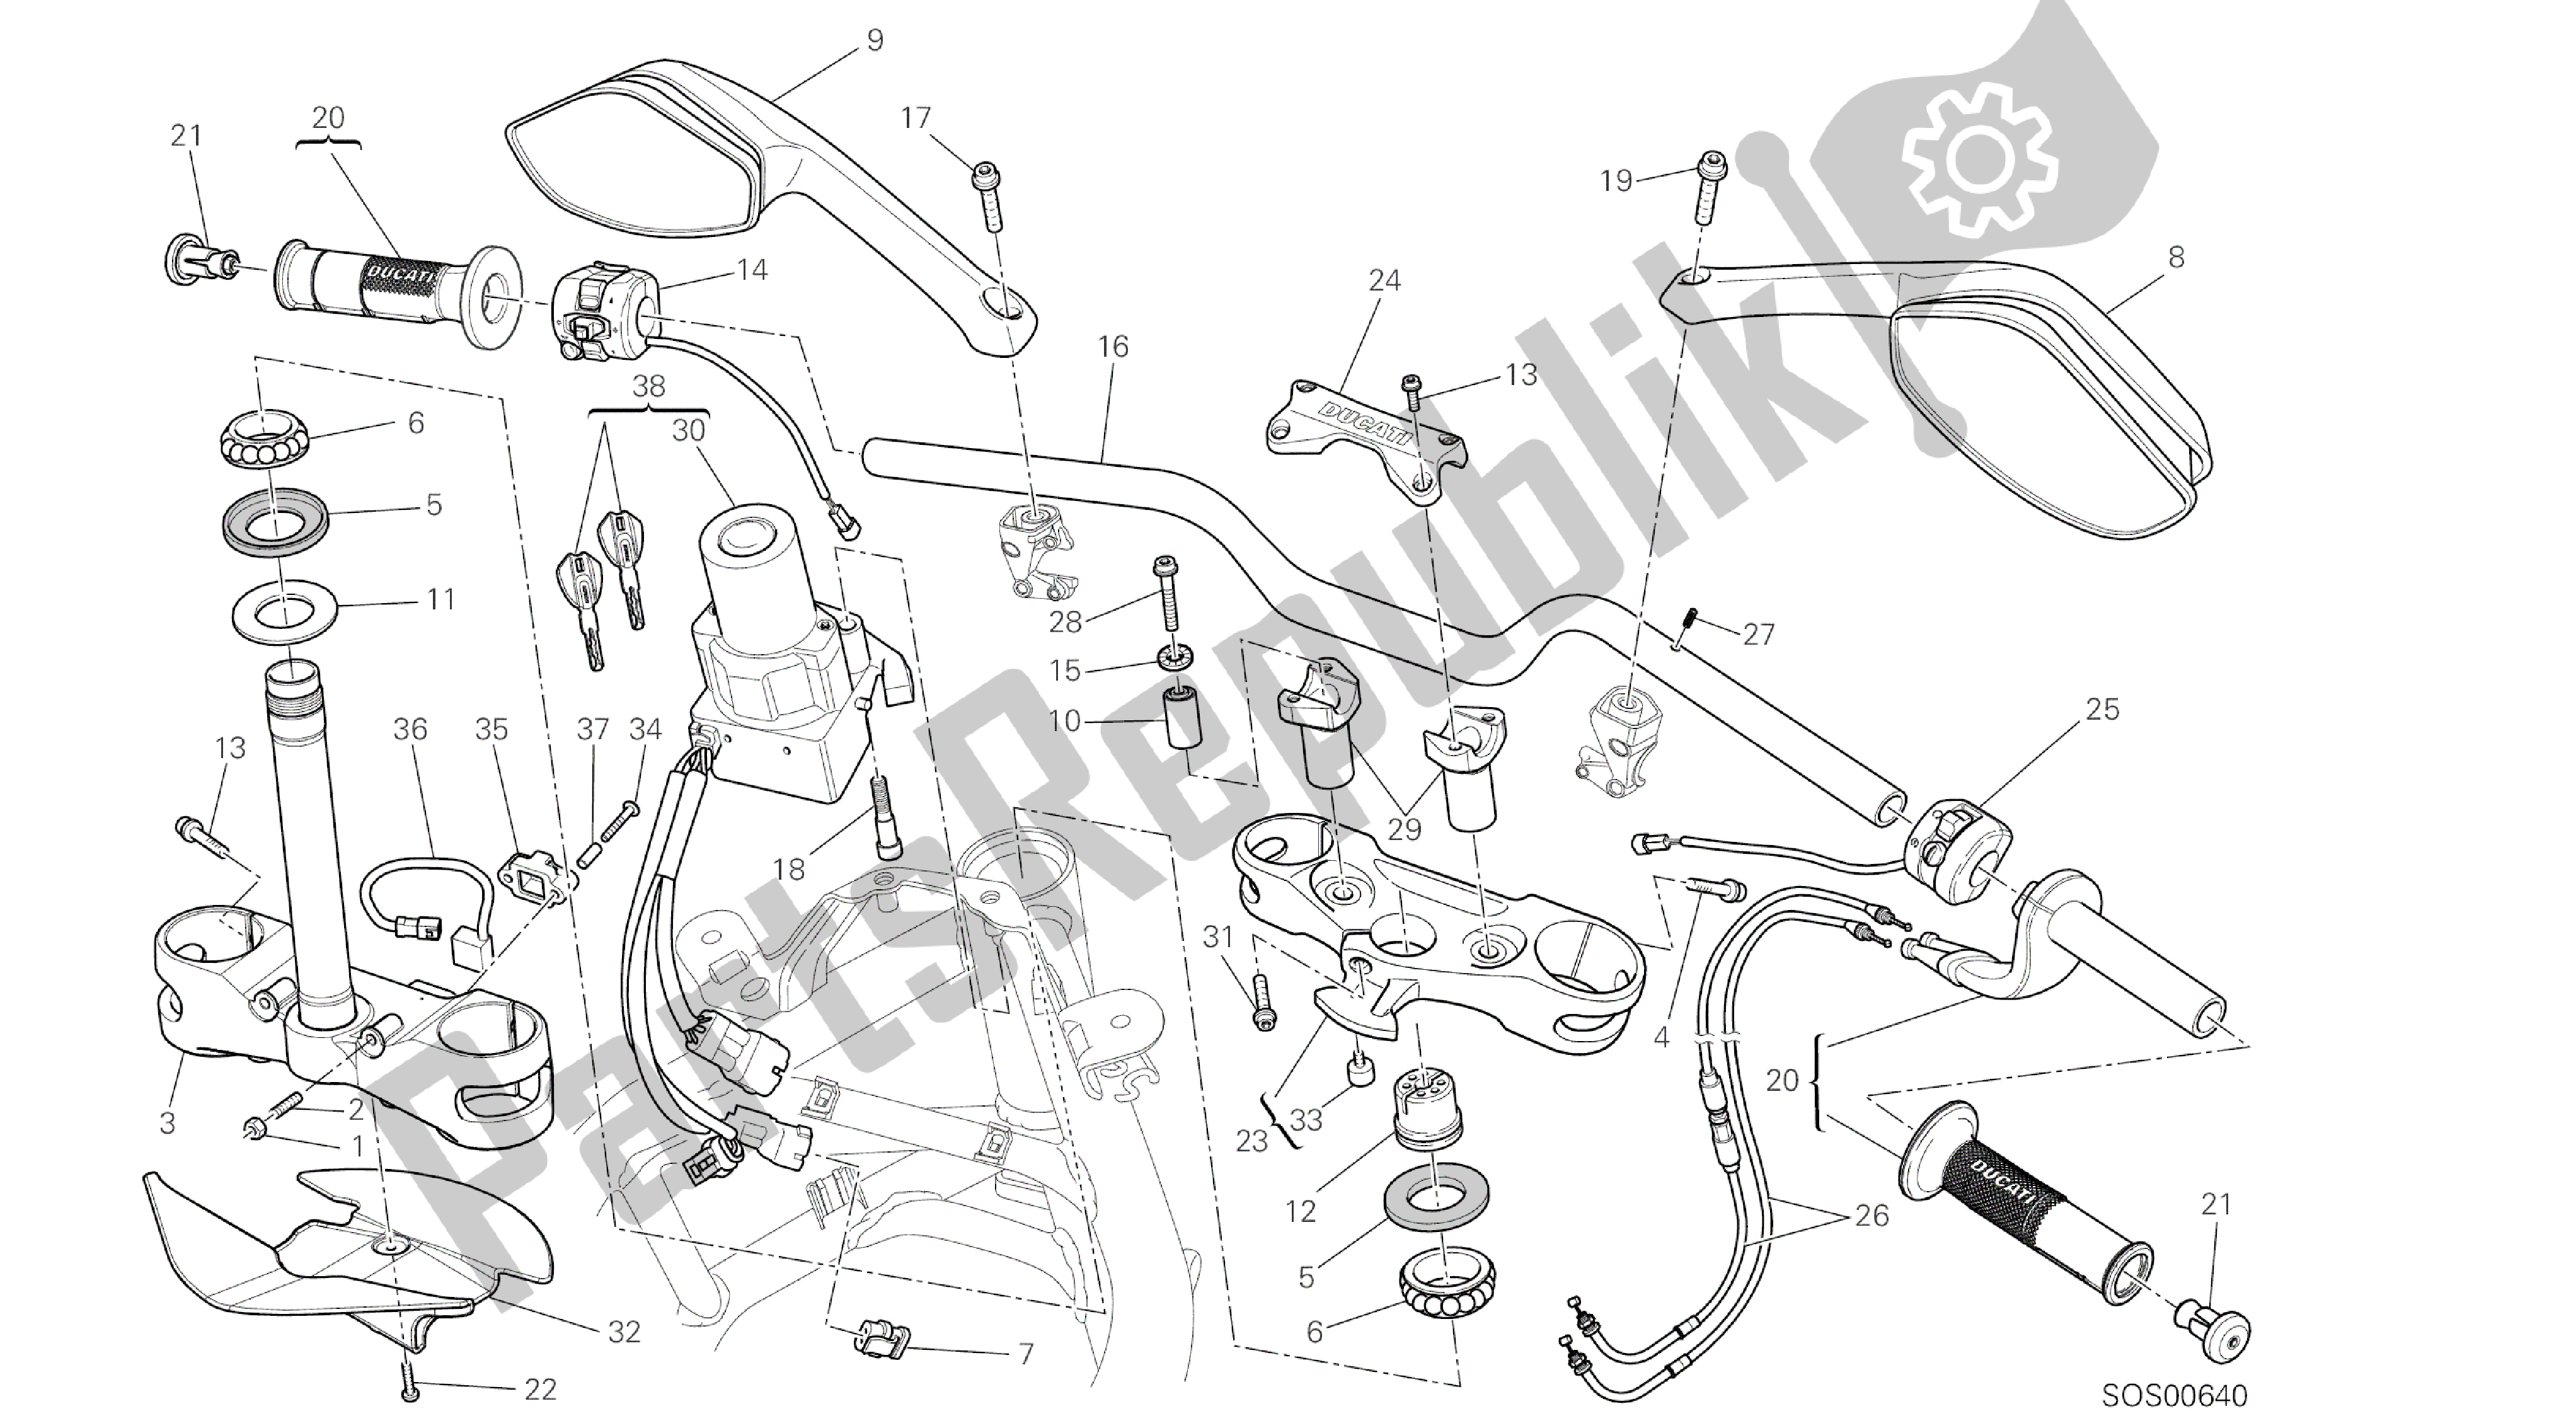 Todas las partes para Dibujo 021 - Manillar [mod: Ms1200pp; Xst: Marco De Grupo Aus, Eur, Fra, Jap, Tha] de Ducati Multistrada S Pikes Peak 1200 2014